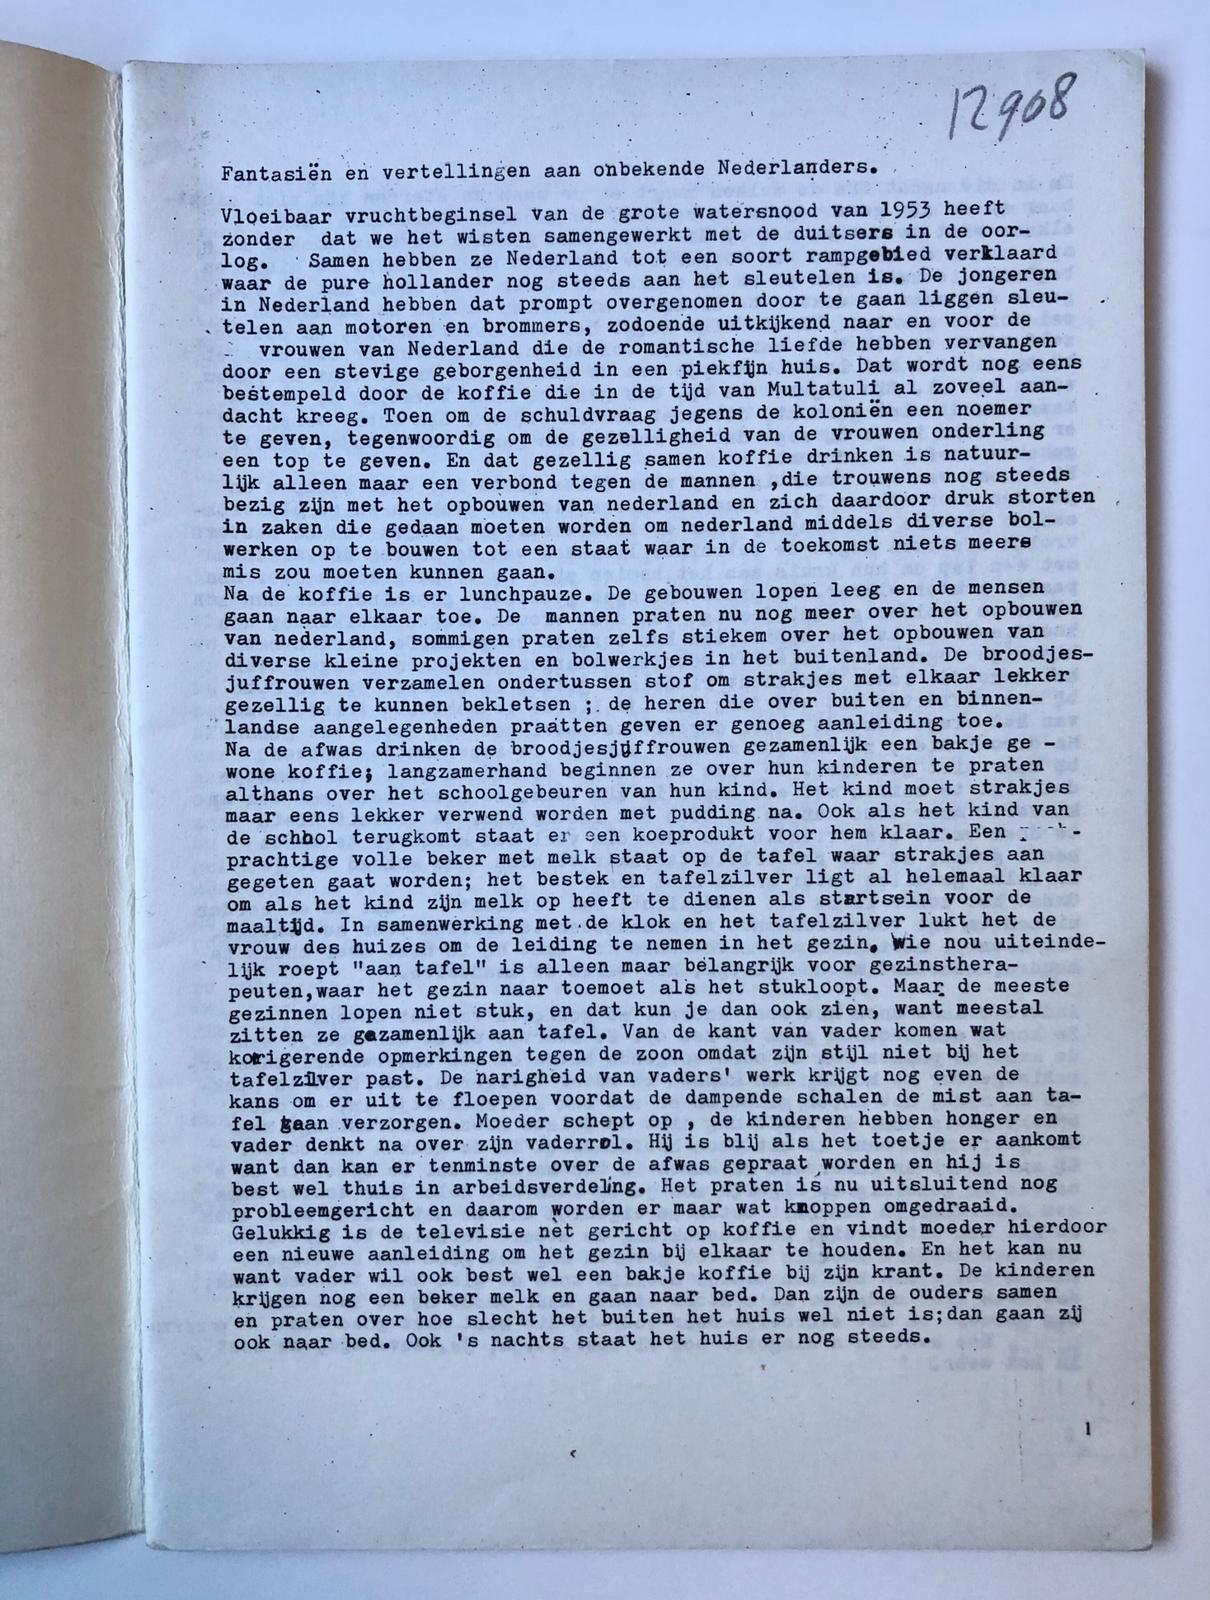 [Printed publication, Literature, 1960?] ‘fantasiën en vertellingen aan onbekende Nederlanders’, gestencild boekje door Kees van Gerwen, 8°, 43 pag., [ca. 1960?].